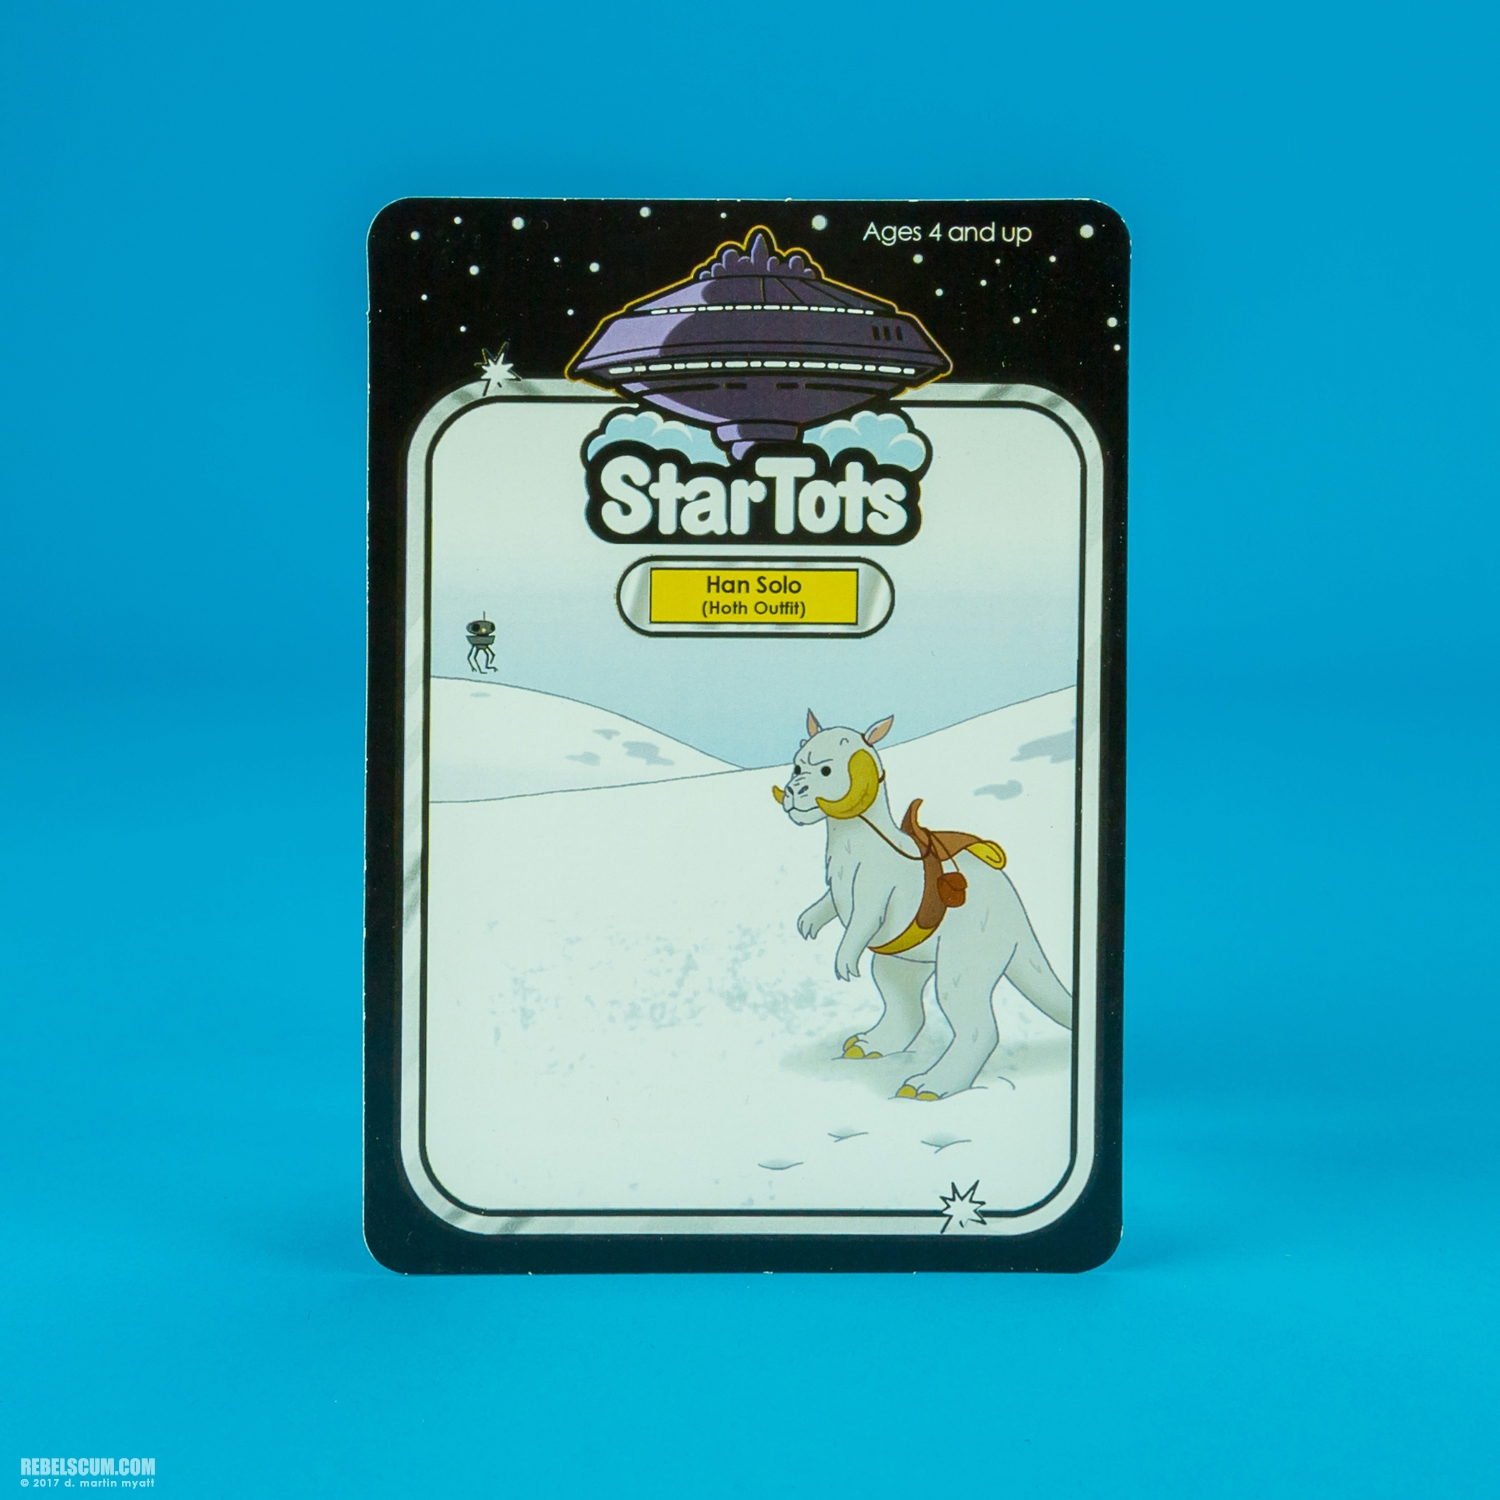 Star-Tots-2015-Star-Wars-Celebration-Anaheim-095.jpg